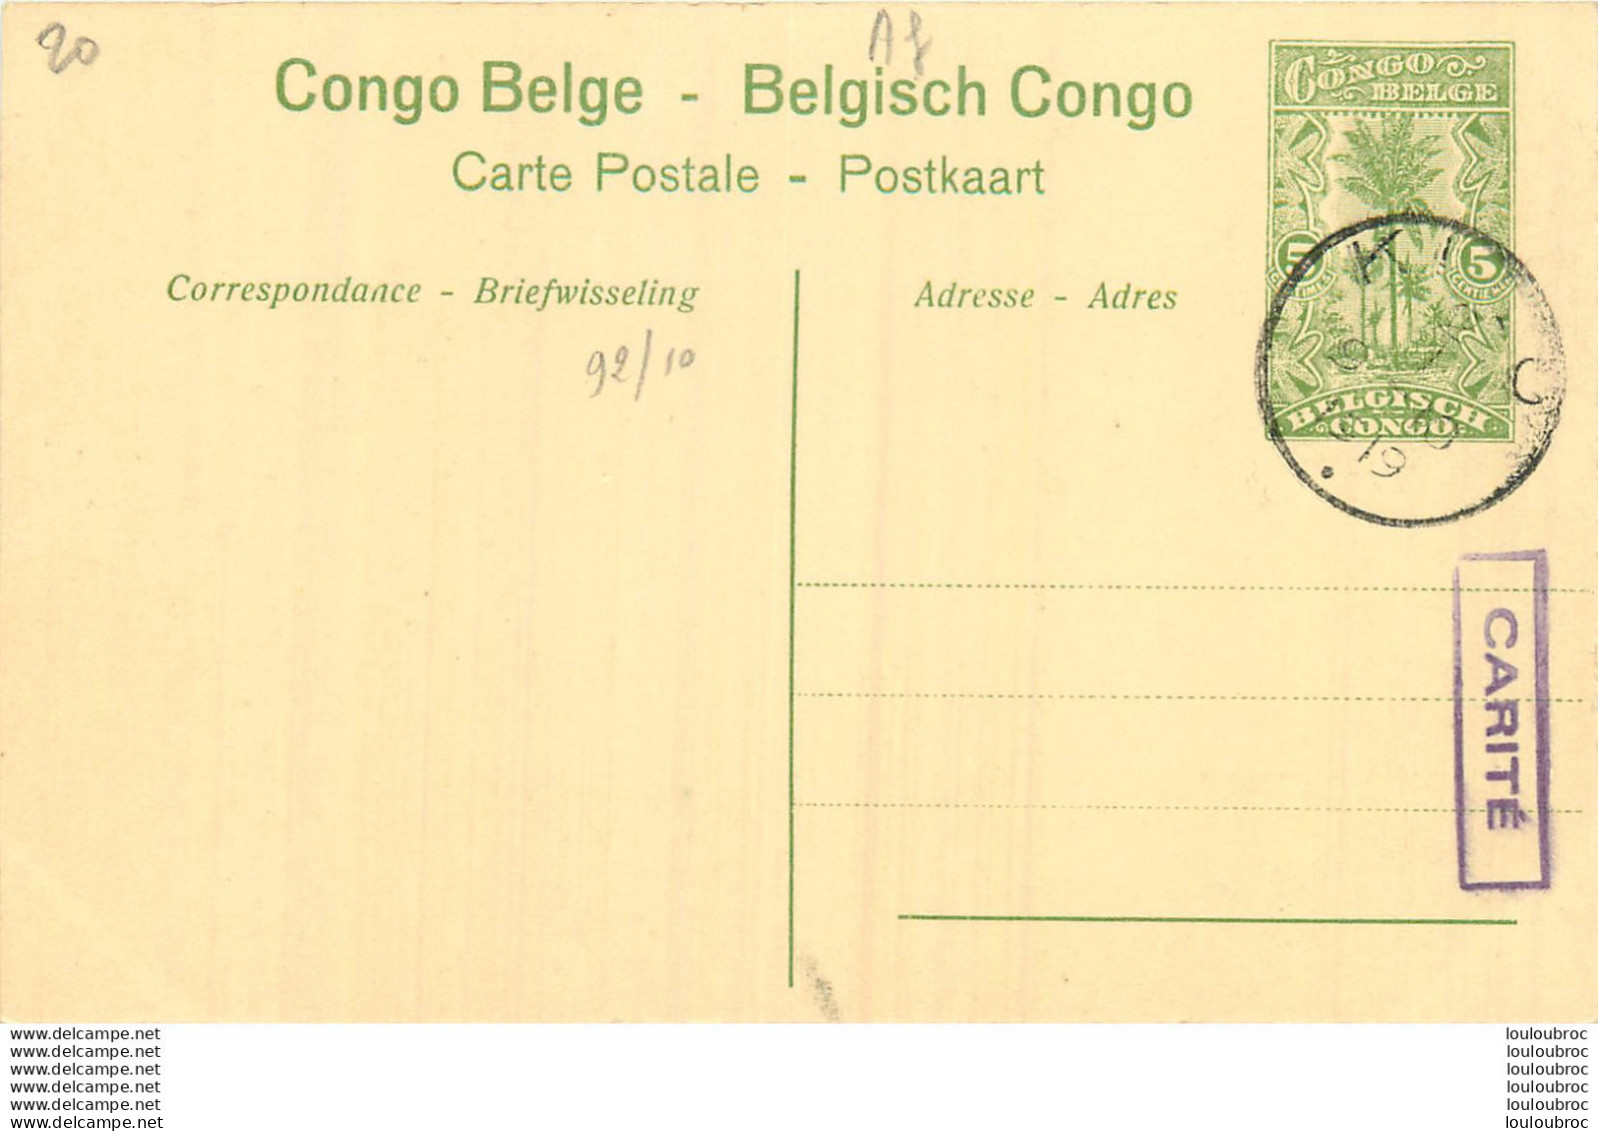 CONGO BELGE TYPES BANGALA AVEC SCARIFICATIONS - Belgian Congo